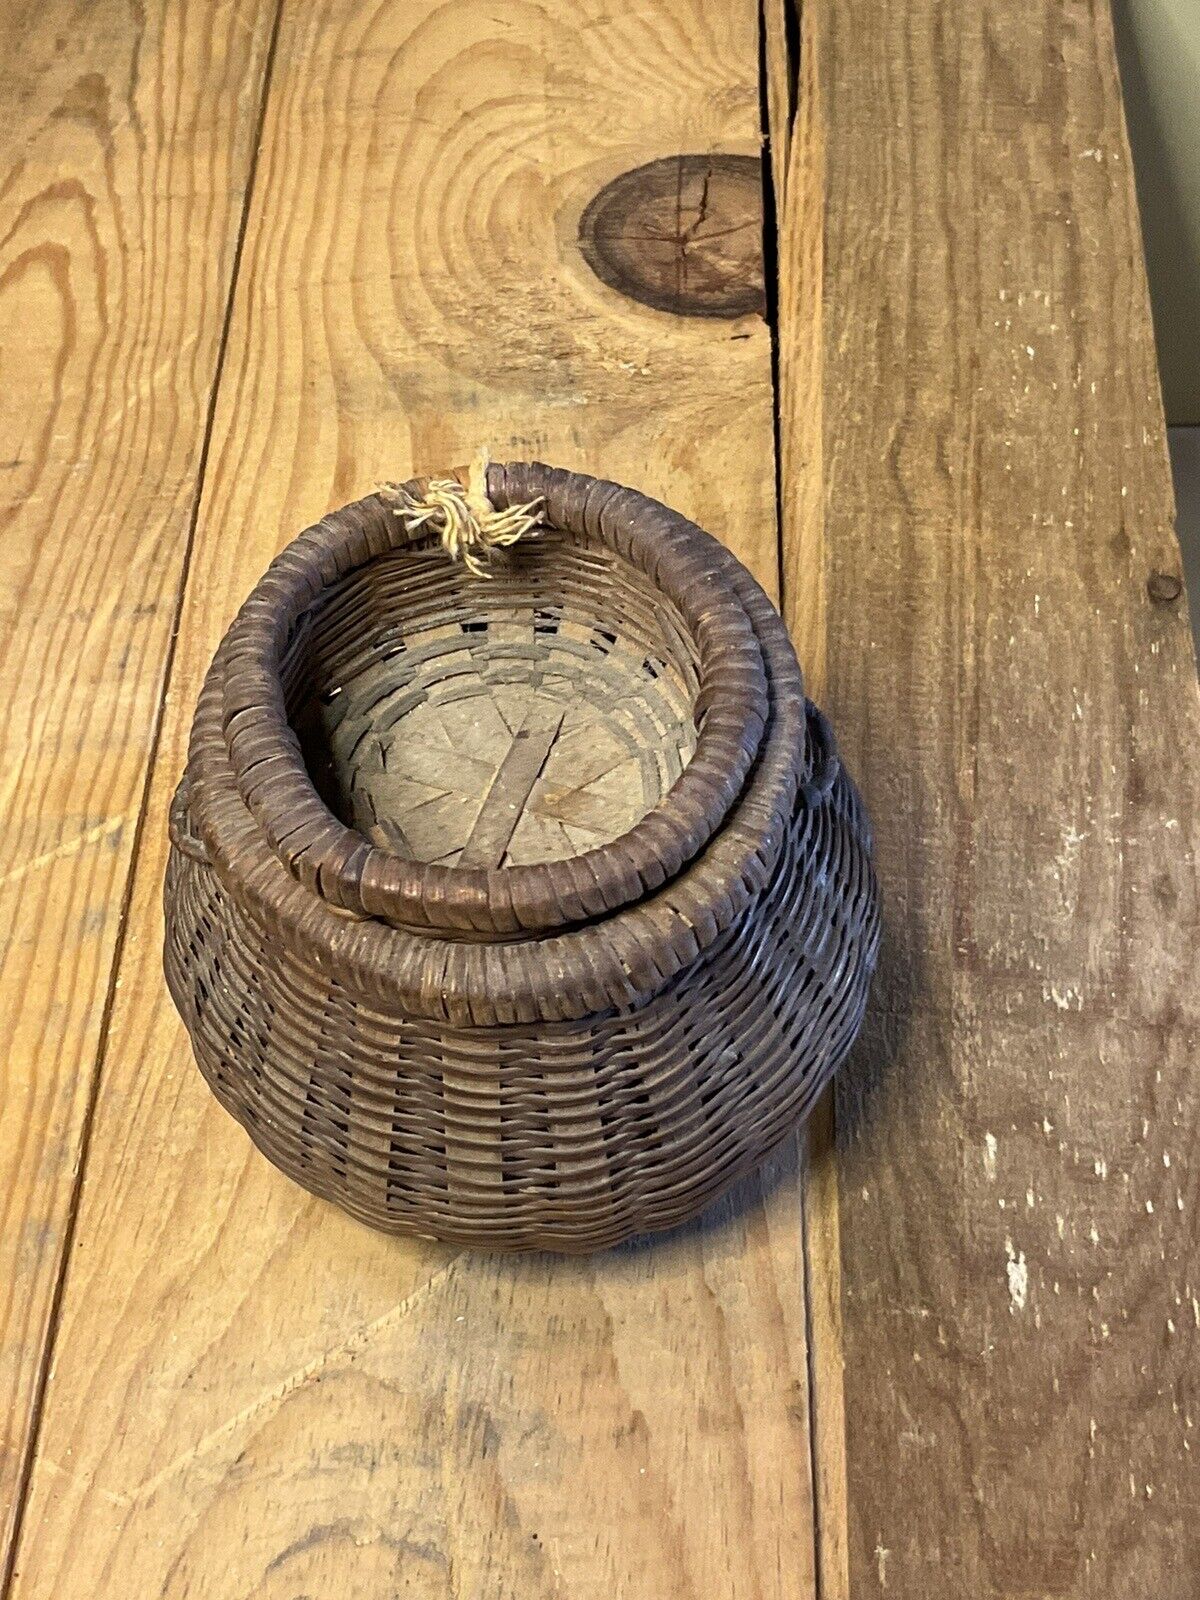 A RARE tiny antique woven splint miniature basket. American origin circa 1900